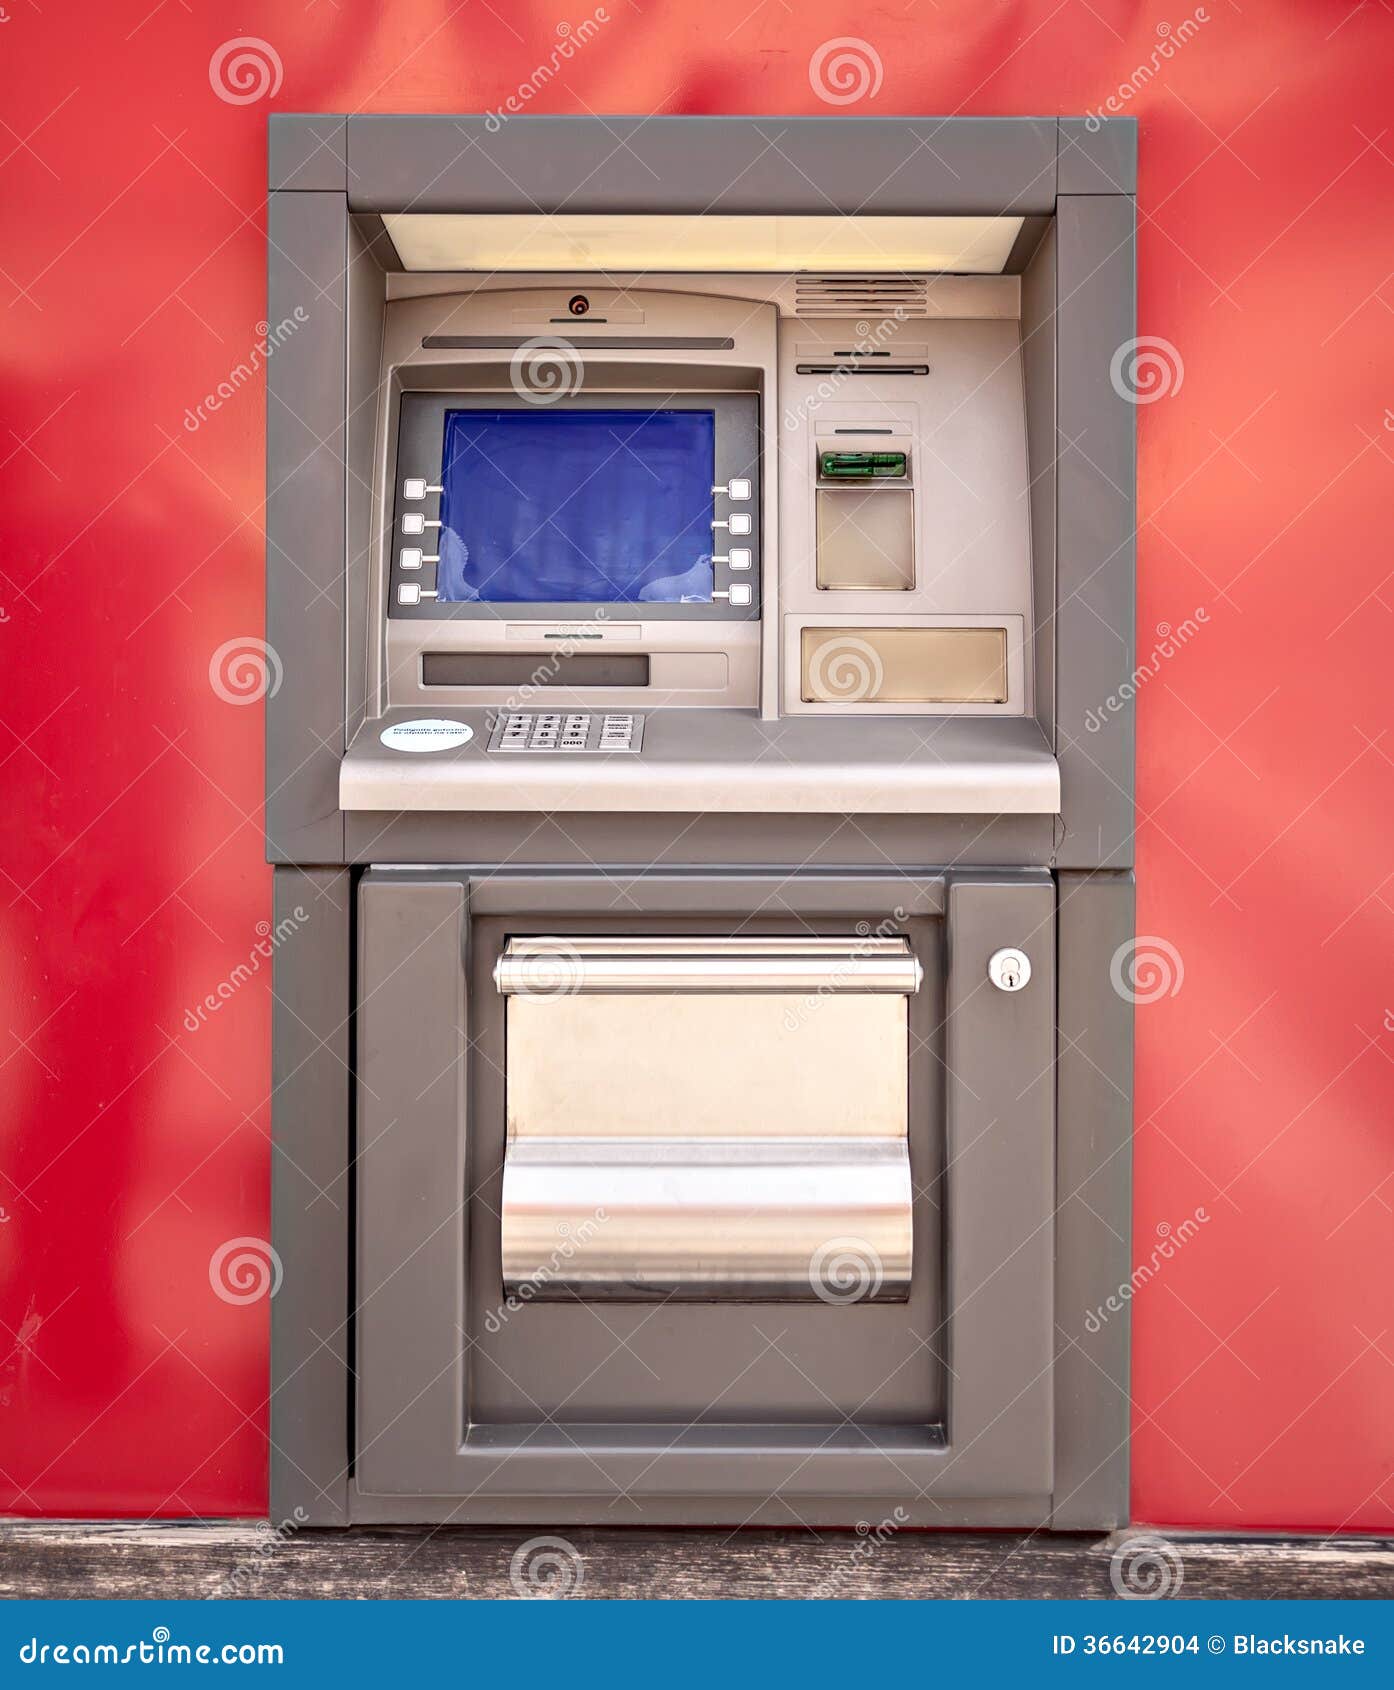 automate cache or money machine